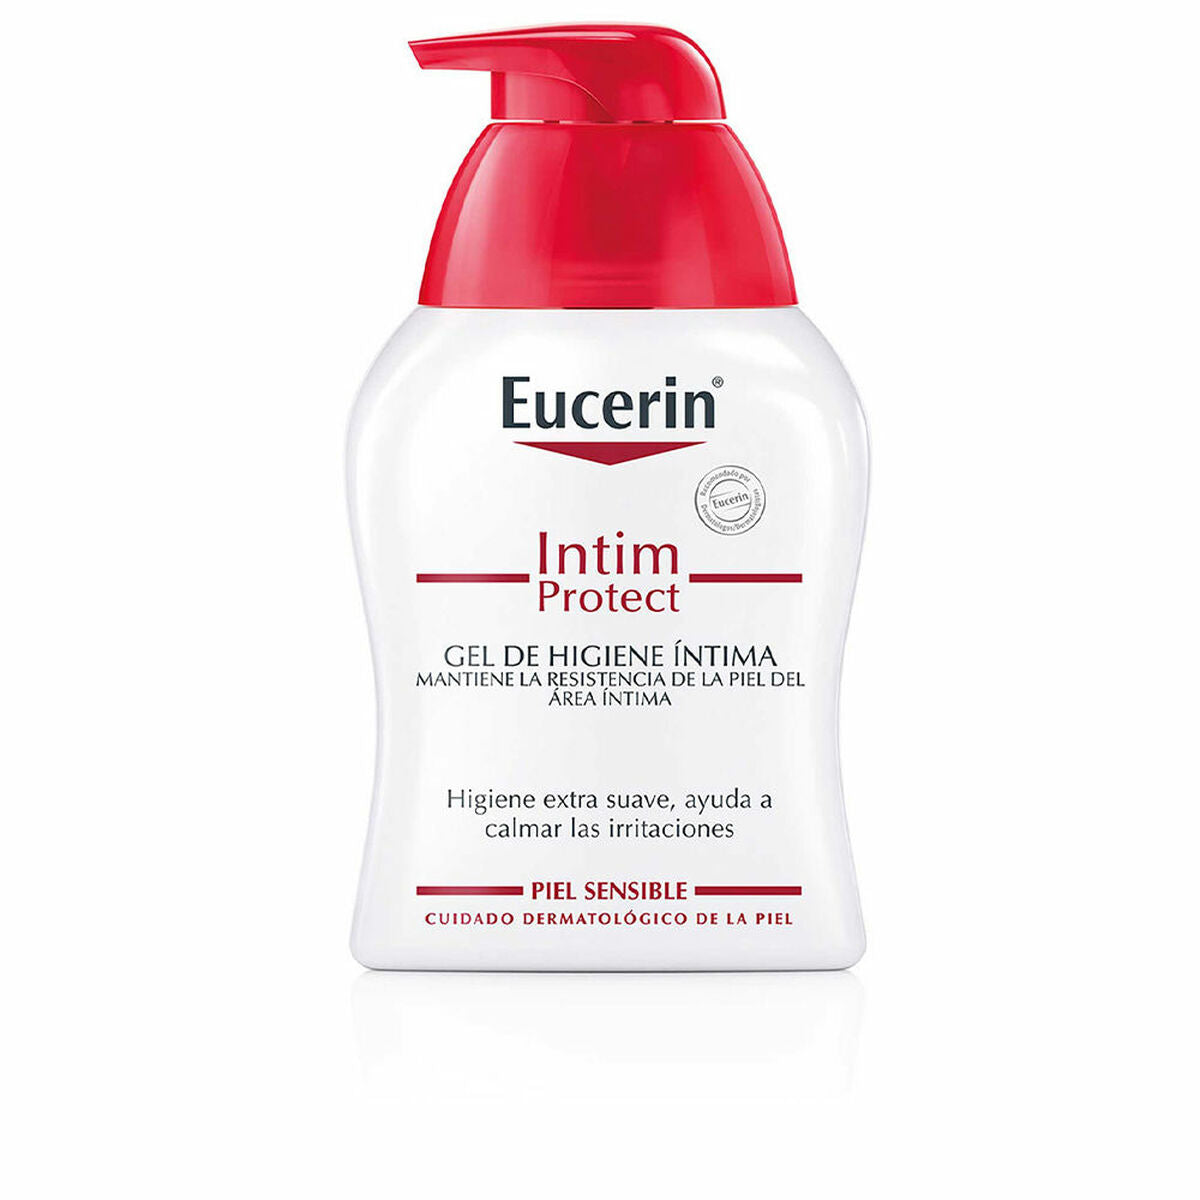 Intimate hygiene gel Eucerin Intim Potrect (250 ml) (Dermocosmetics) (Parapharmacy)-0